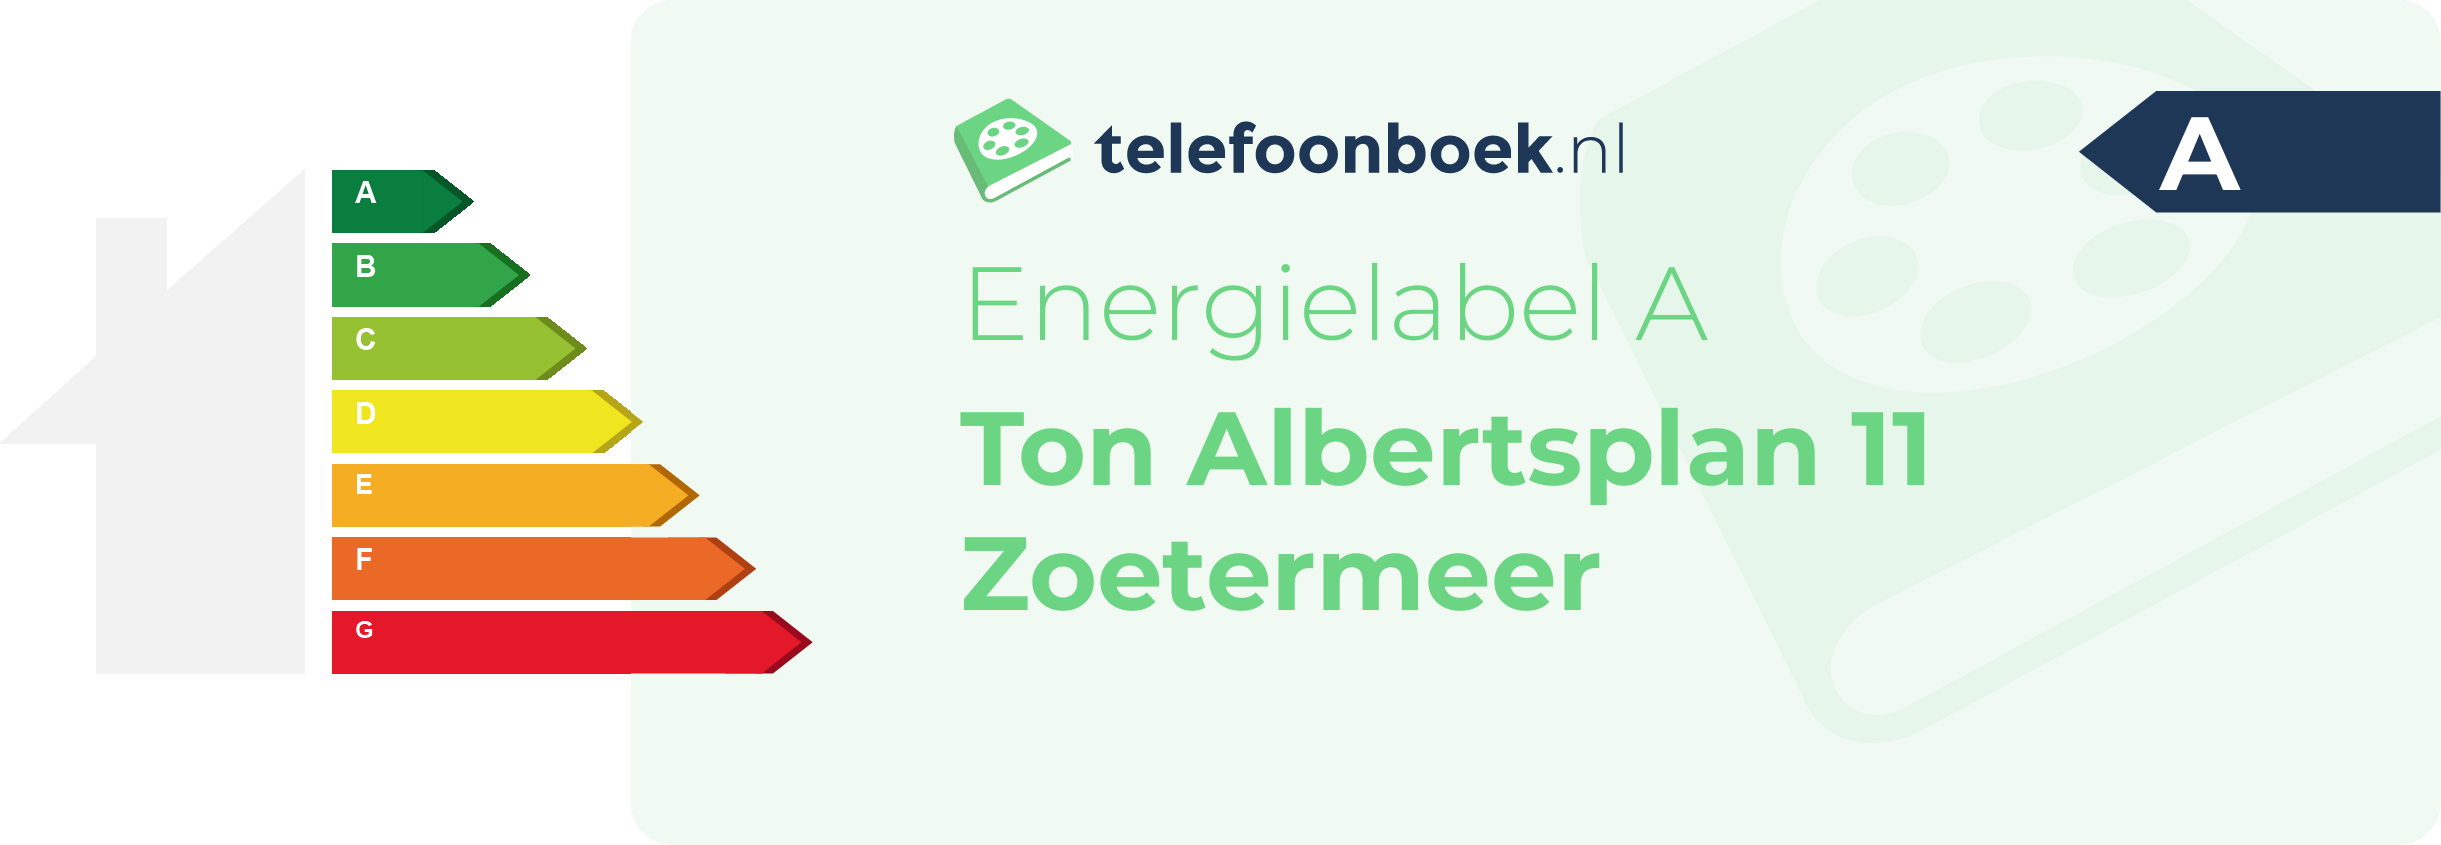 Energielabel Ton Albertsplan 11 Zoetermeer